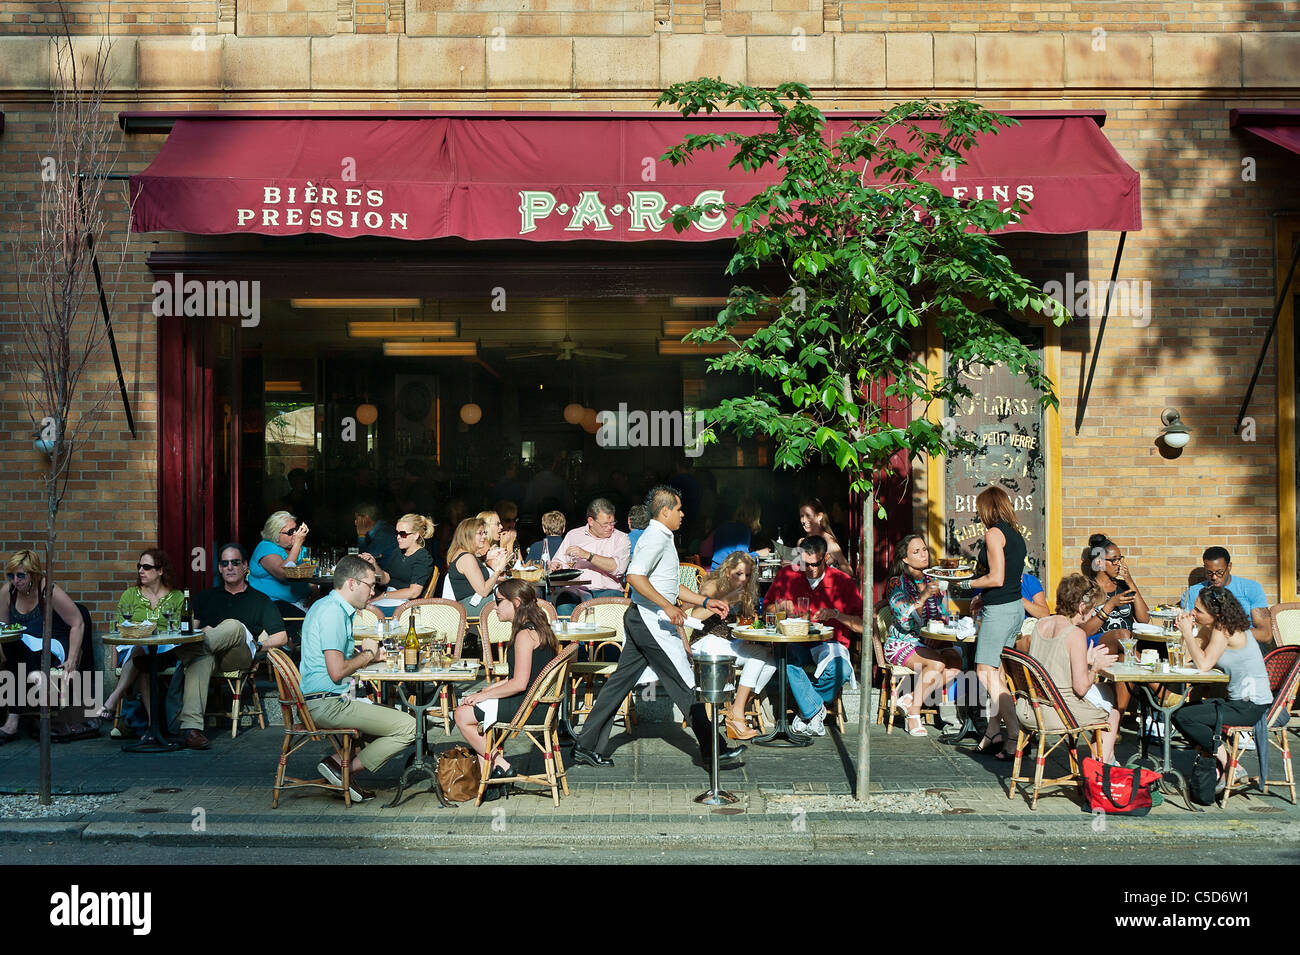 Diners enjoy sidewalk seating at a Philadelphia restaurant, Pennsylvania Stock Photo